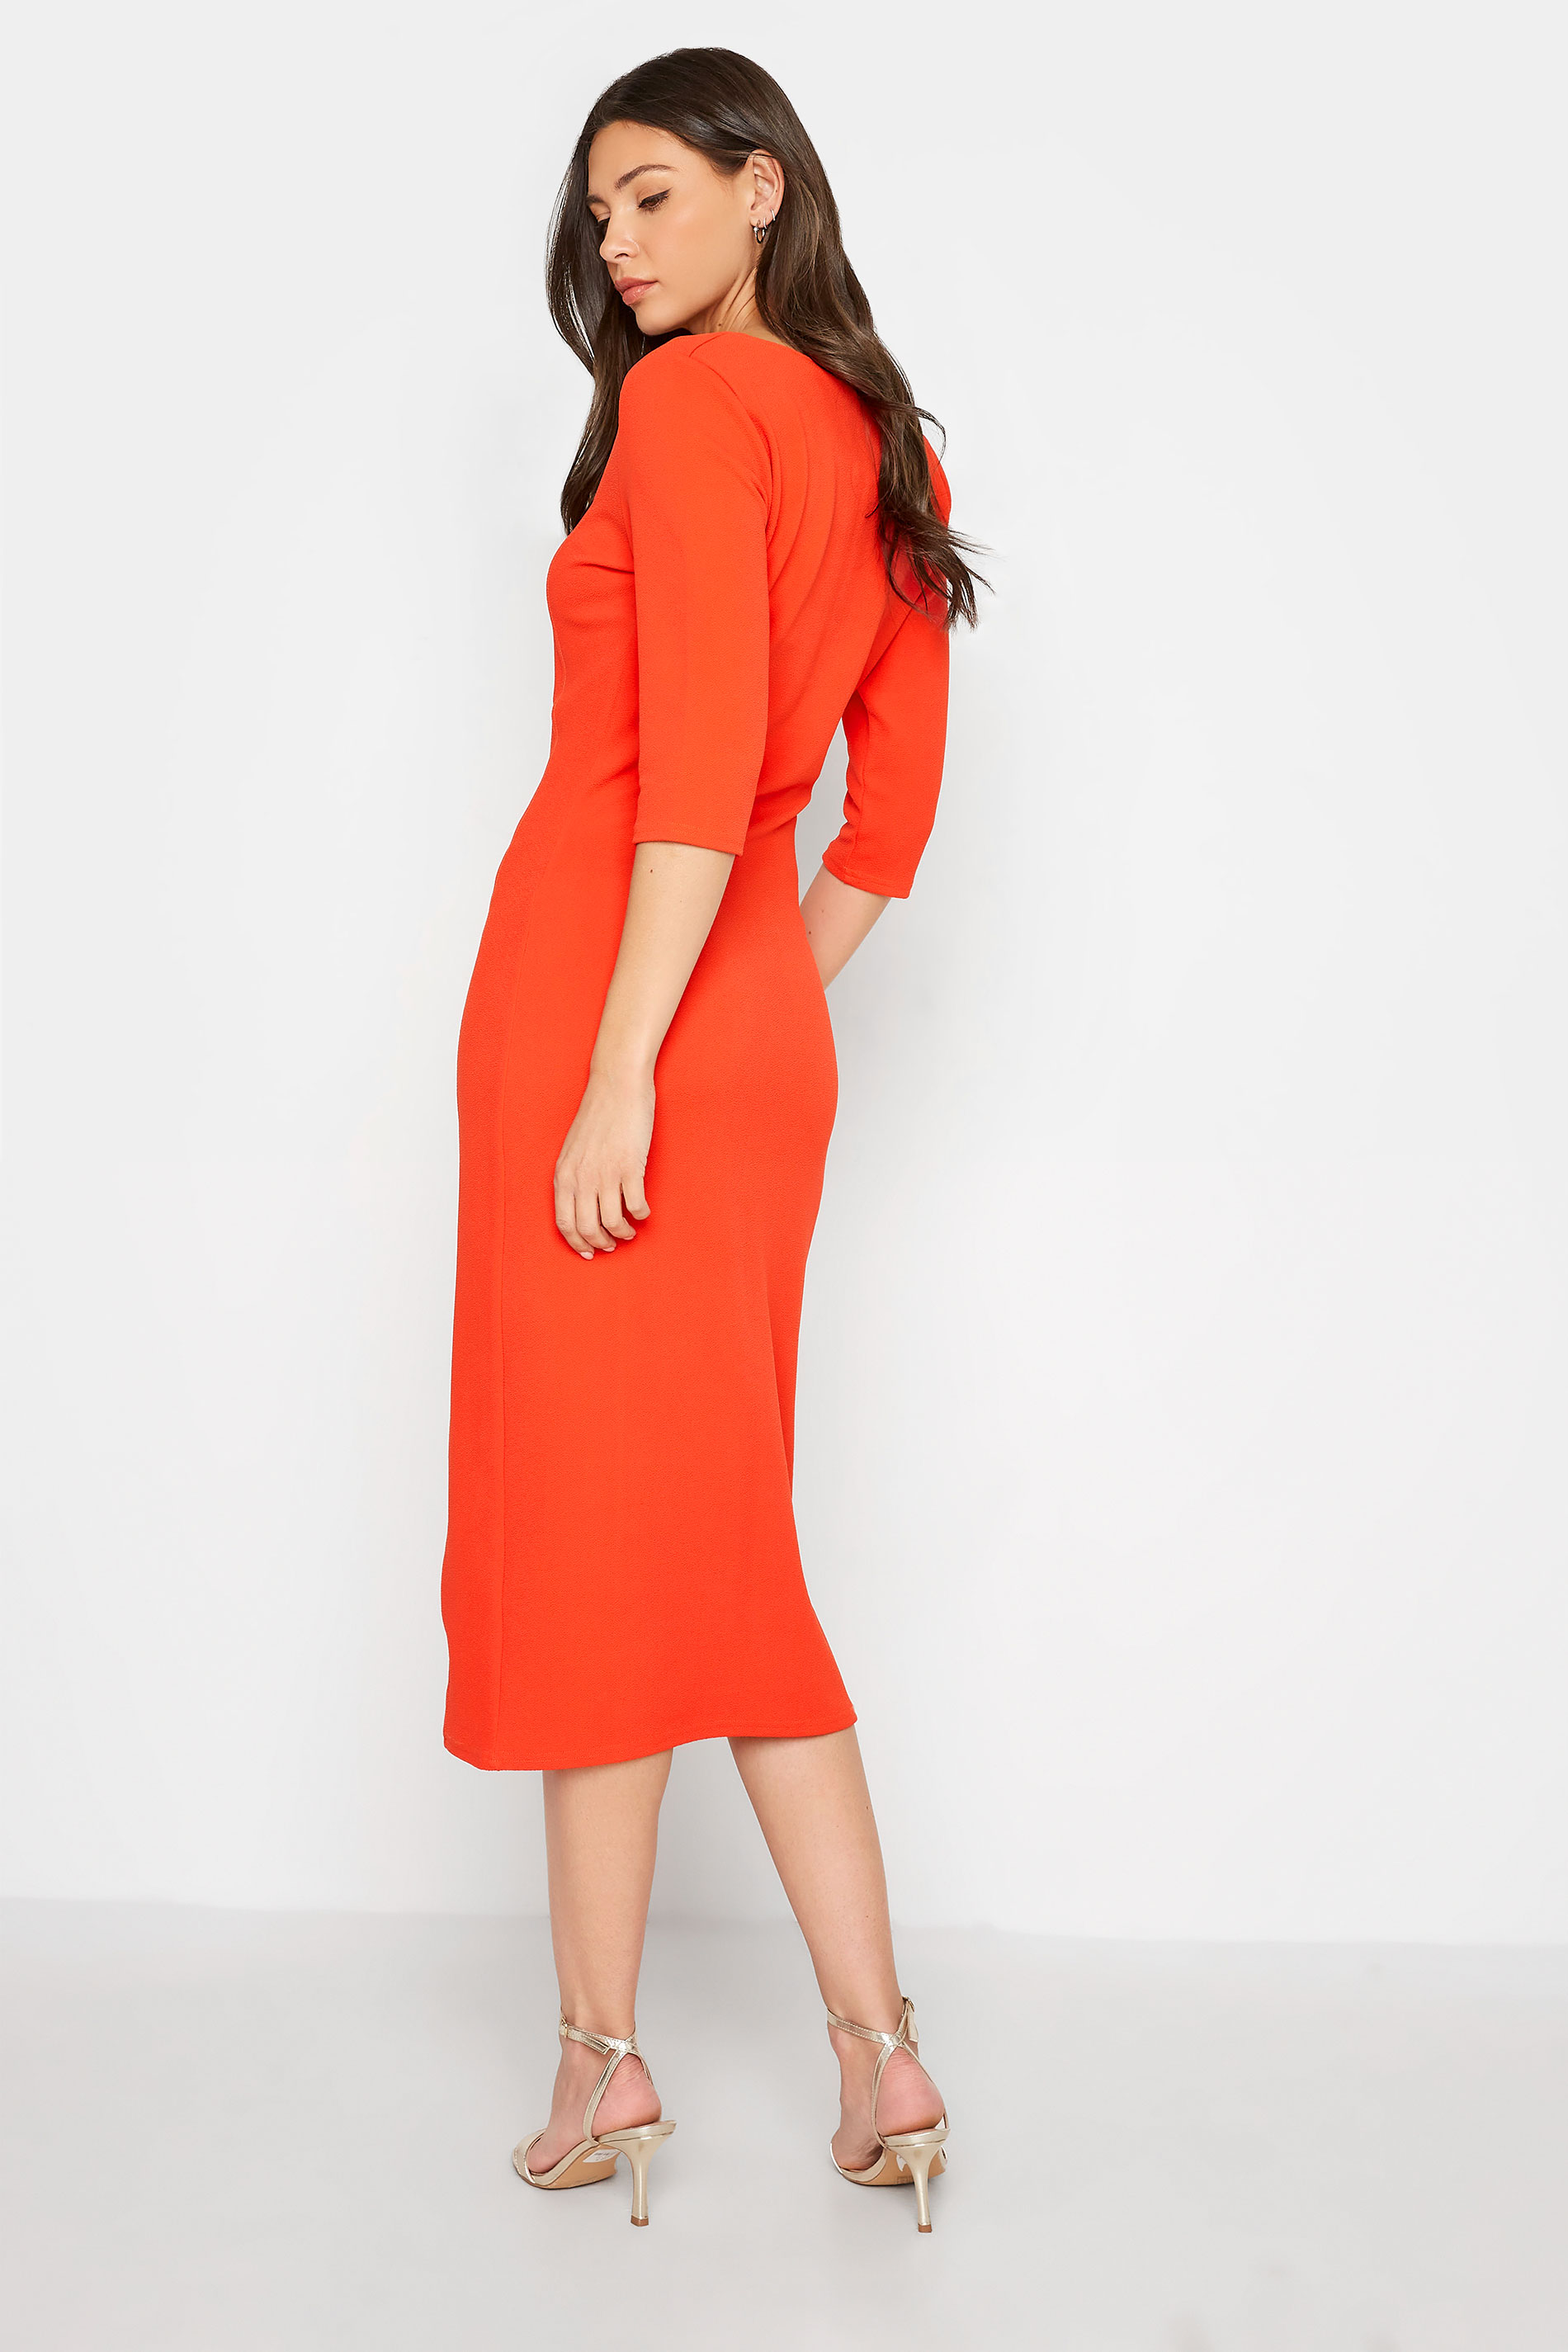 Tall Women's LTS Bright Orange Notch Neck Midi Dress | Long Tall Sally